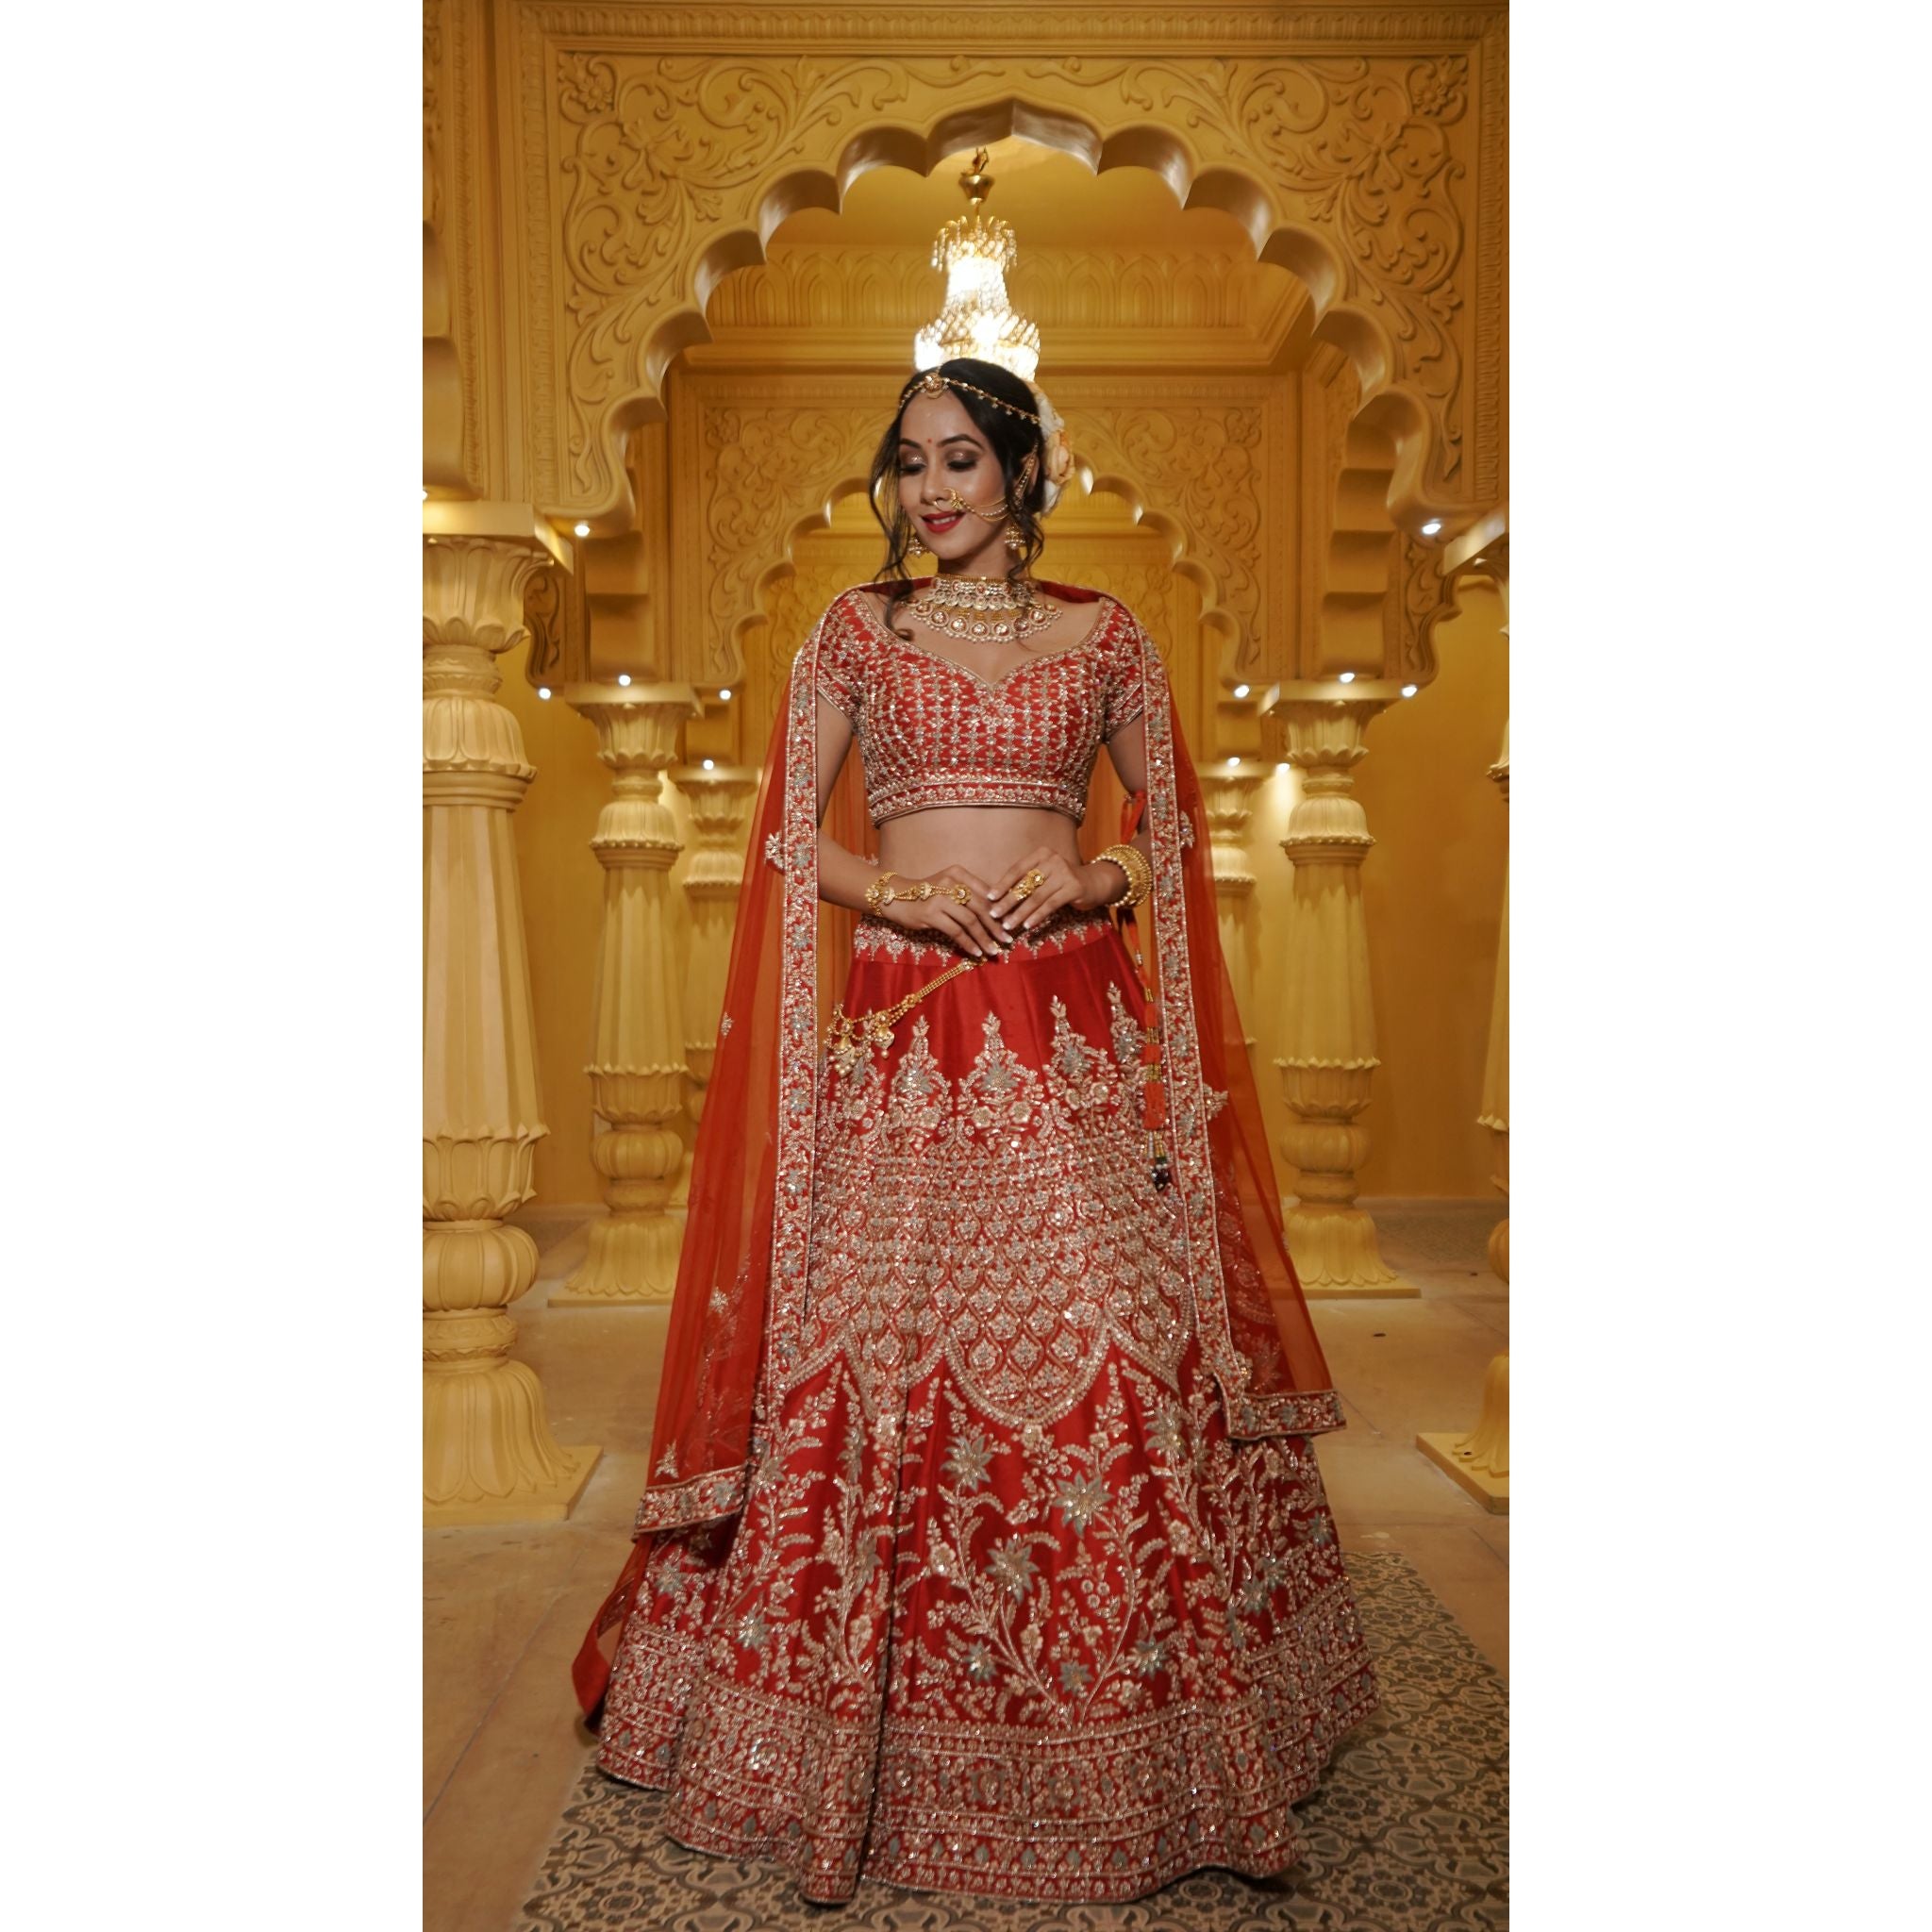 Vermillion Red And Gold Lehenga Set - Indian Designer Bridal Wedding Outfit